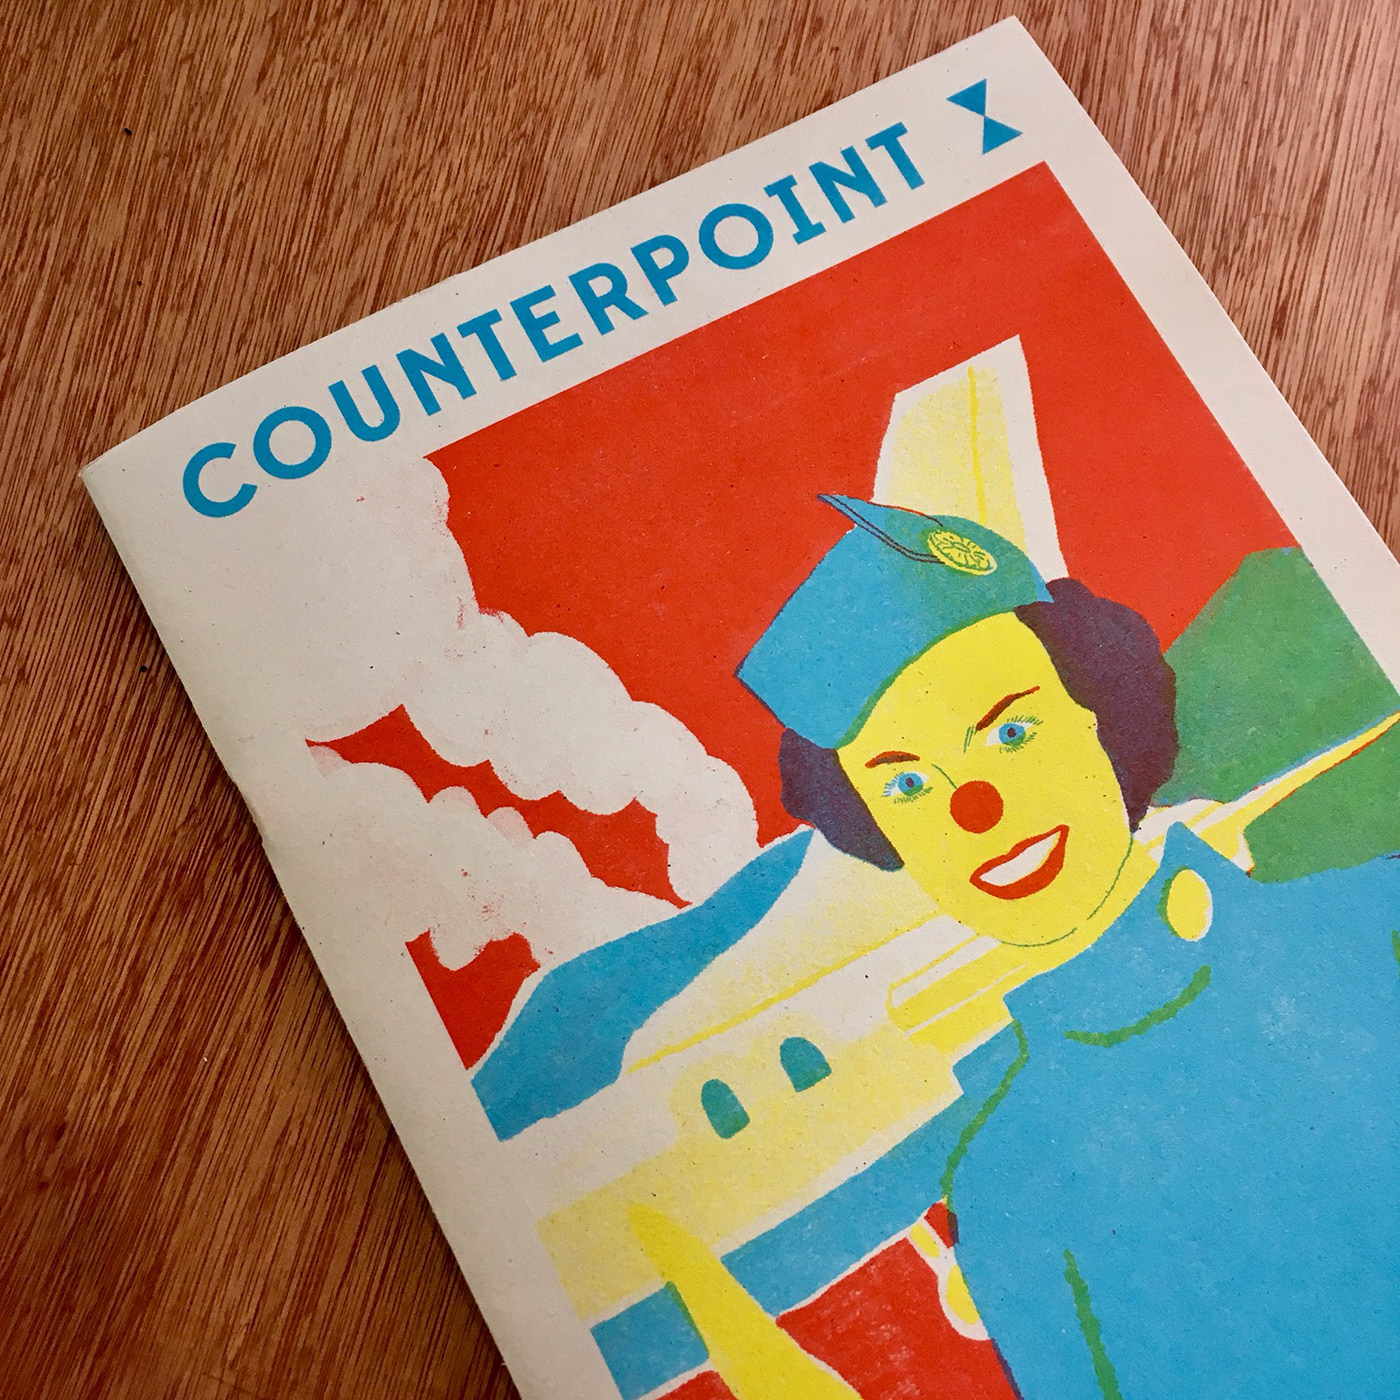 Character color colour counterpoint flight Love magazine Riso Risoprint Travel